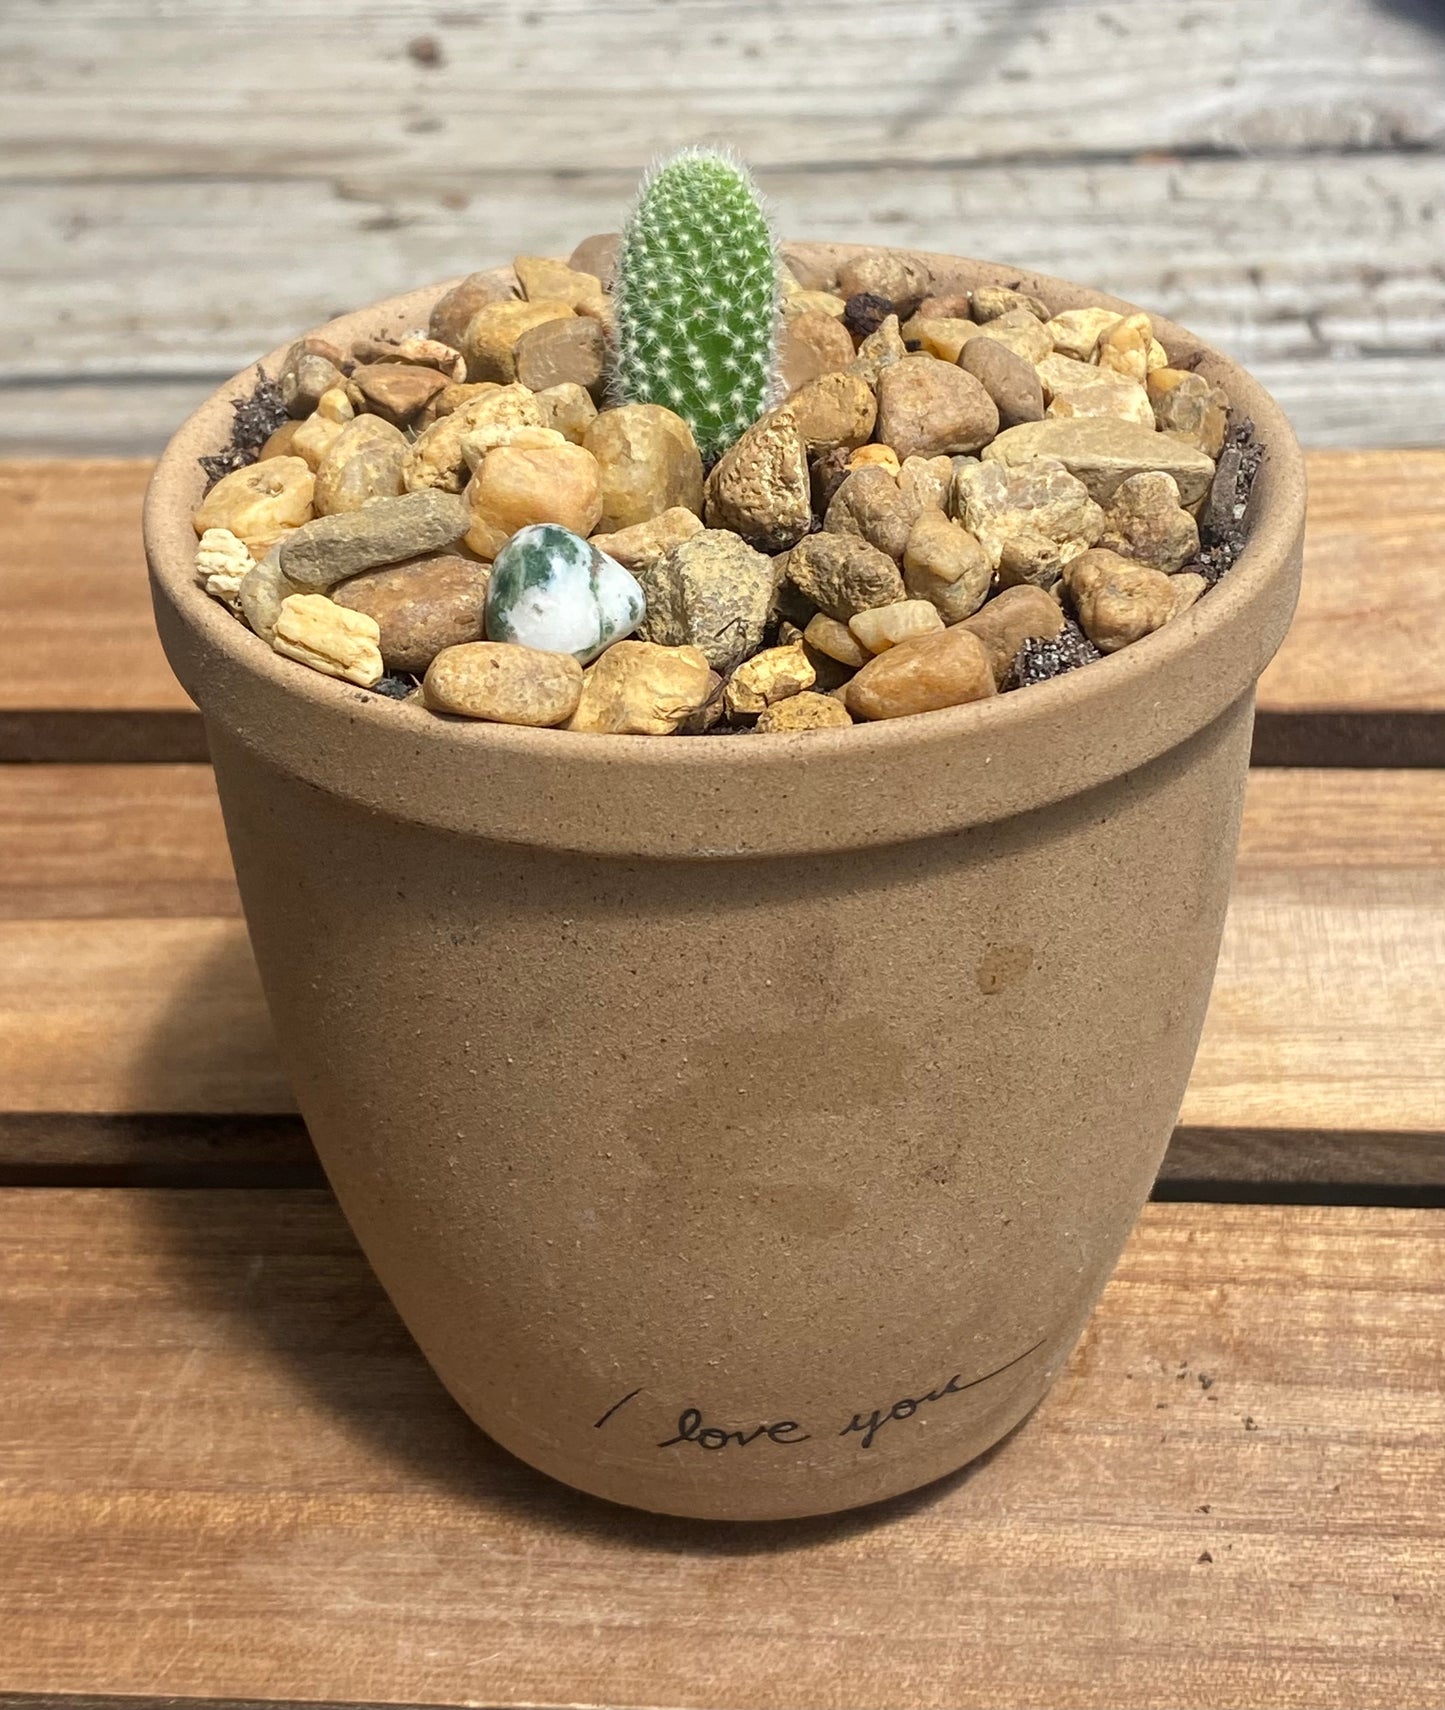 Bunny Ear Cactus in "I love you" clay pot 